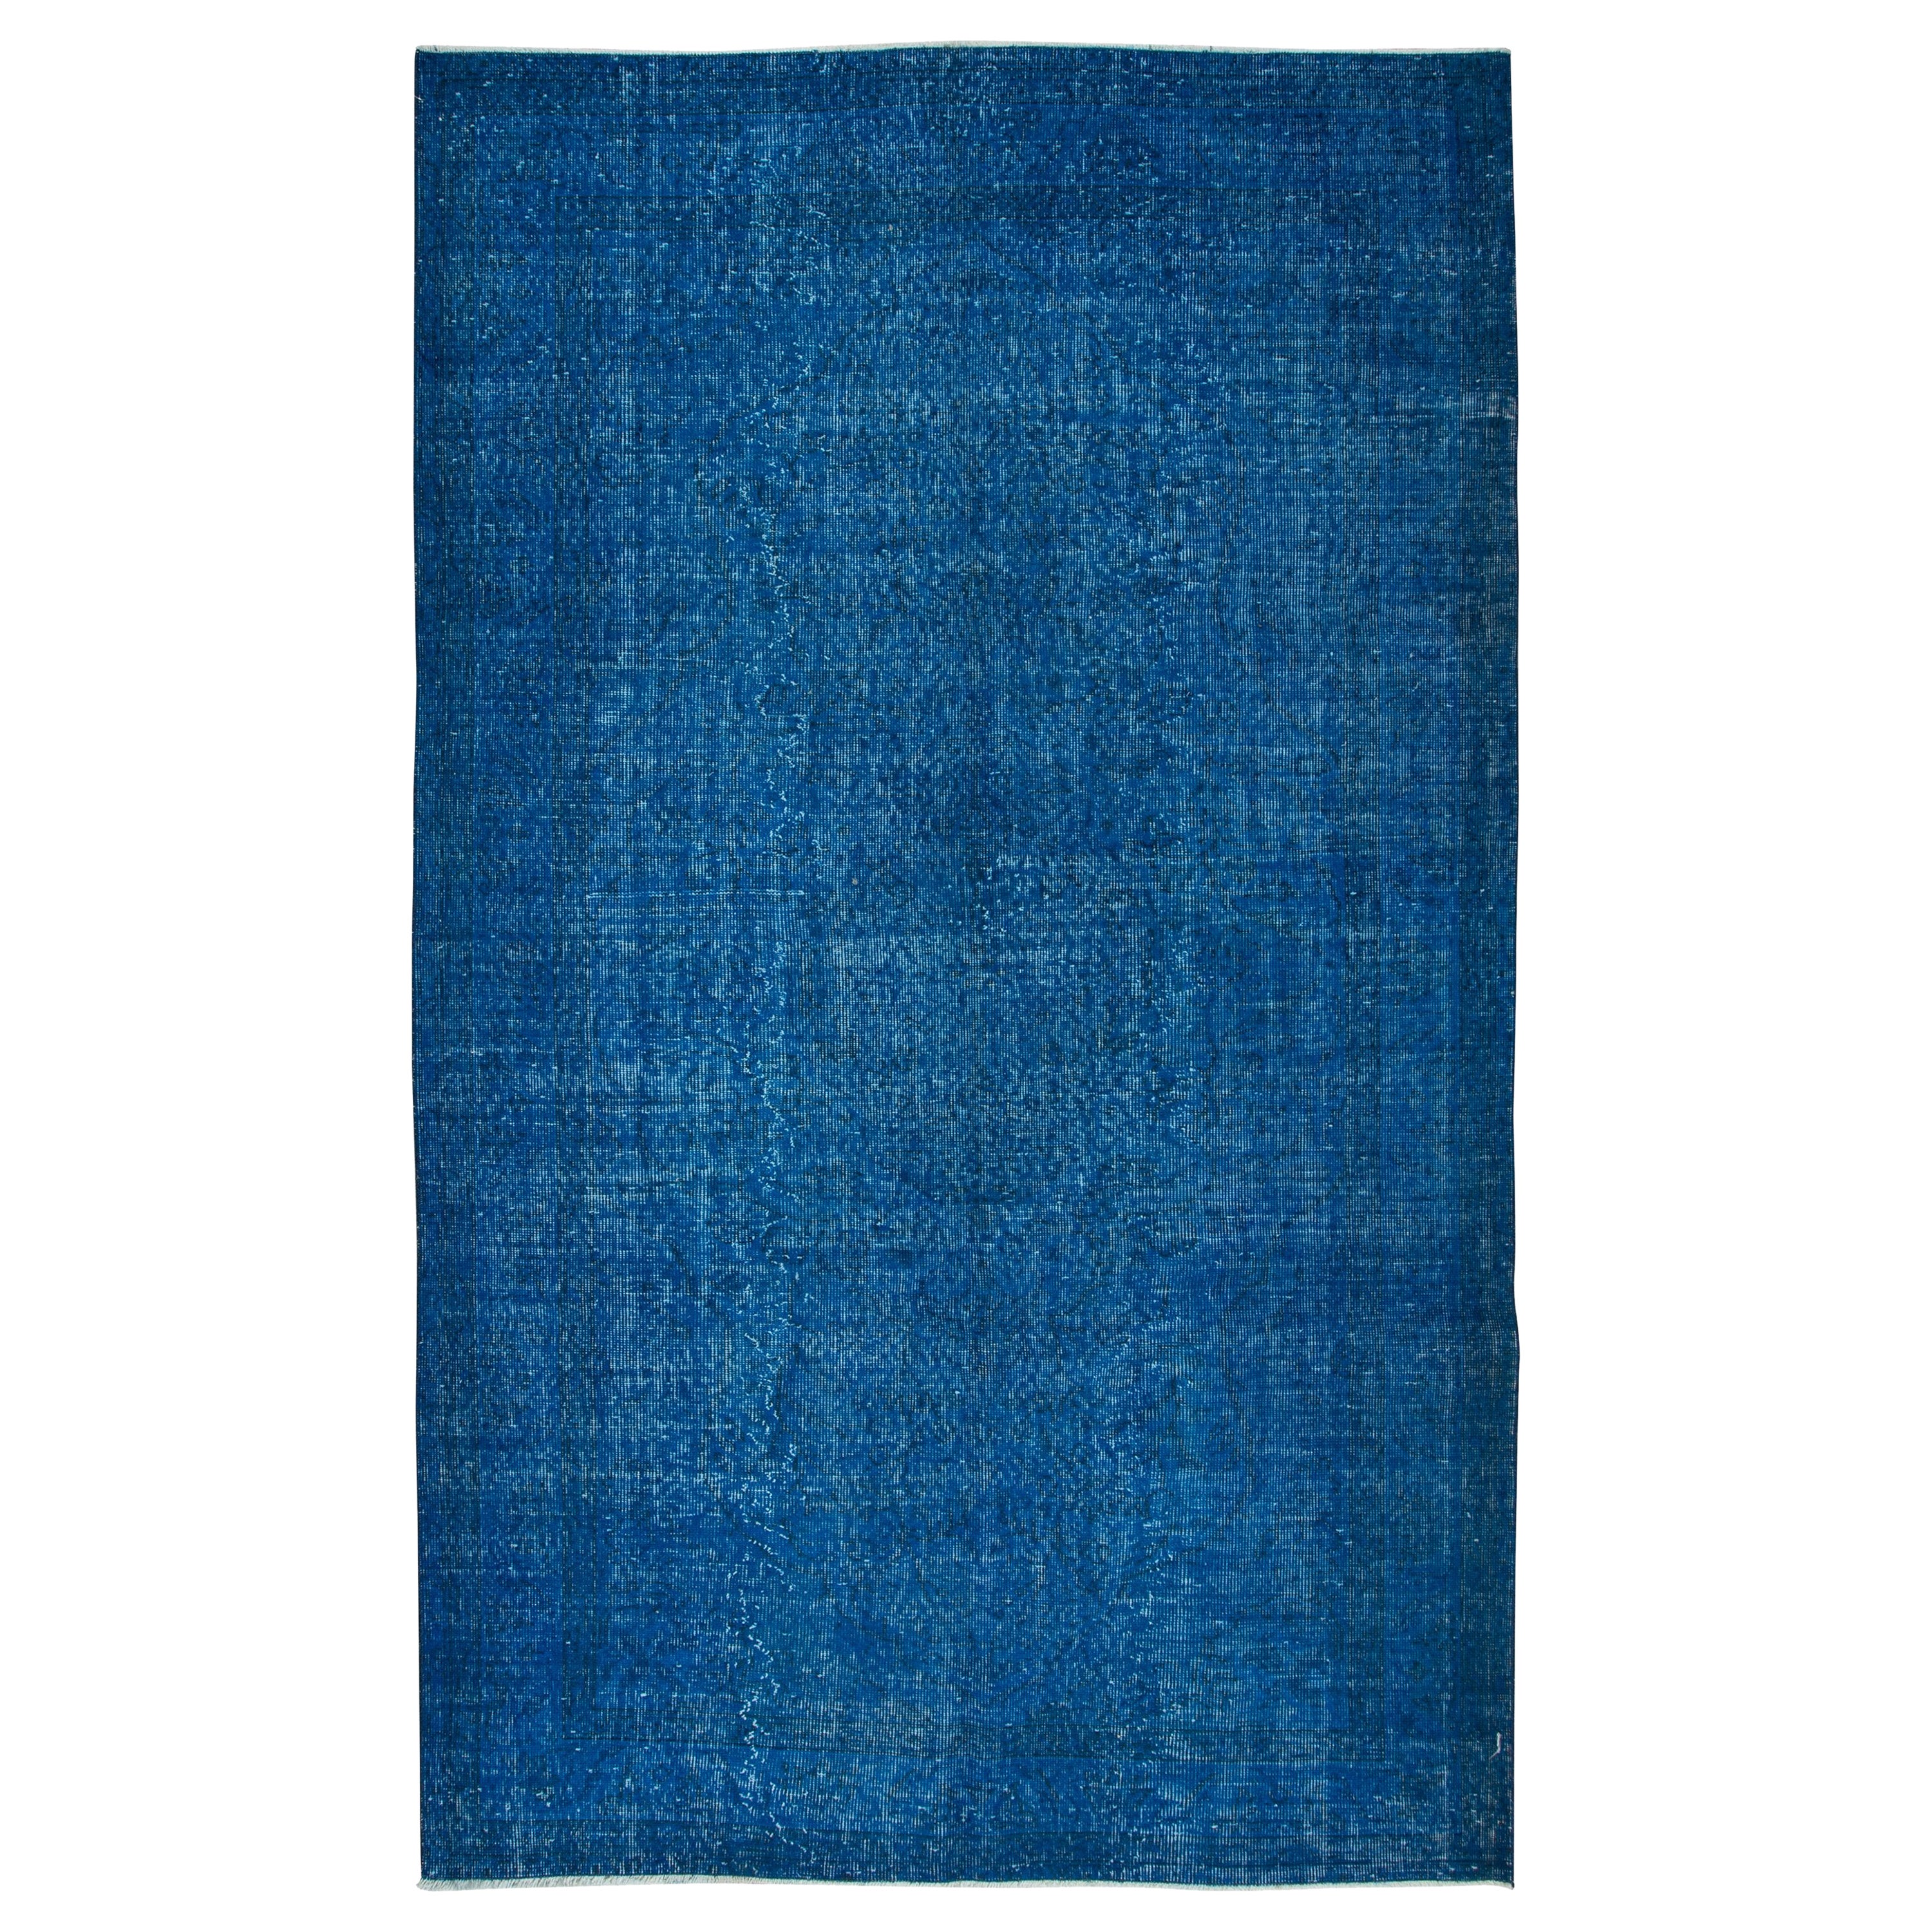 5.3x8.8 Ft Handmade Turkish Wool Area Rug in Solid Blue 4 Modern Interiors